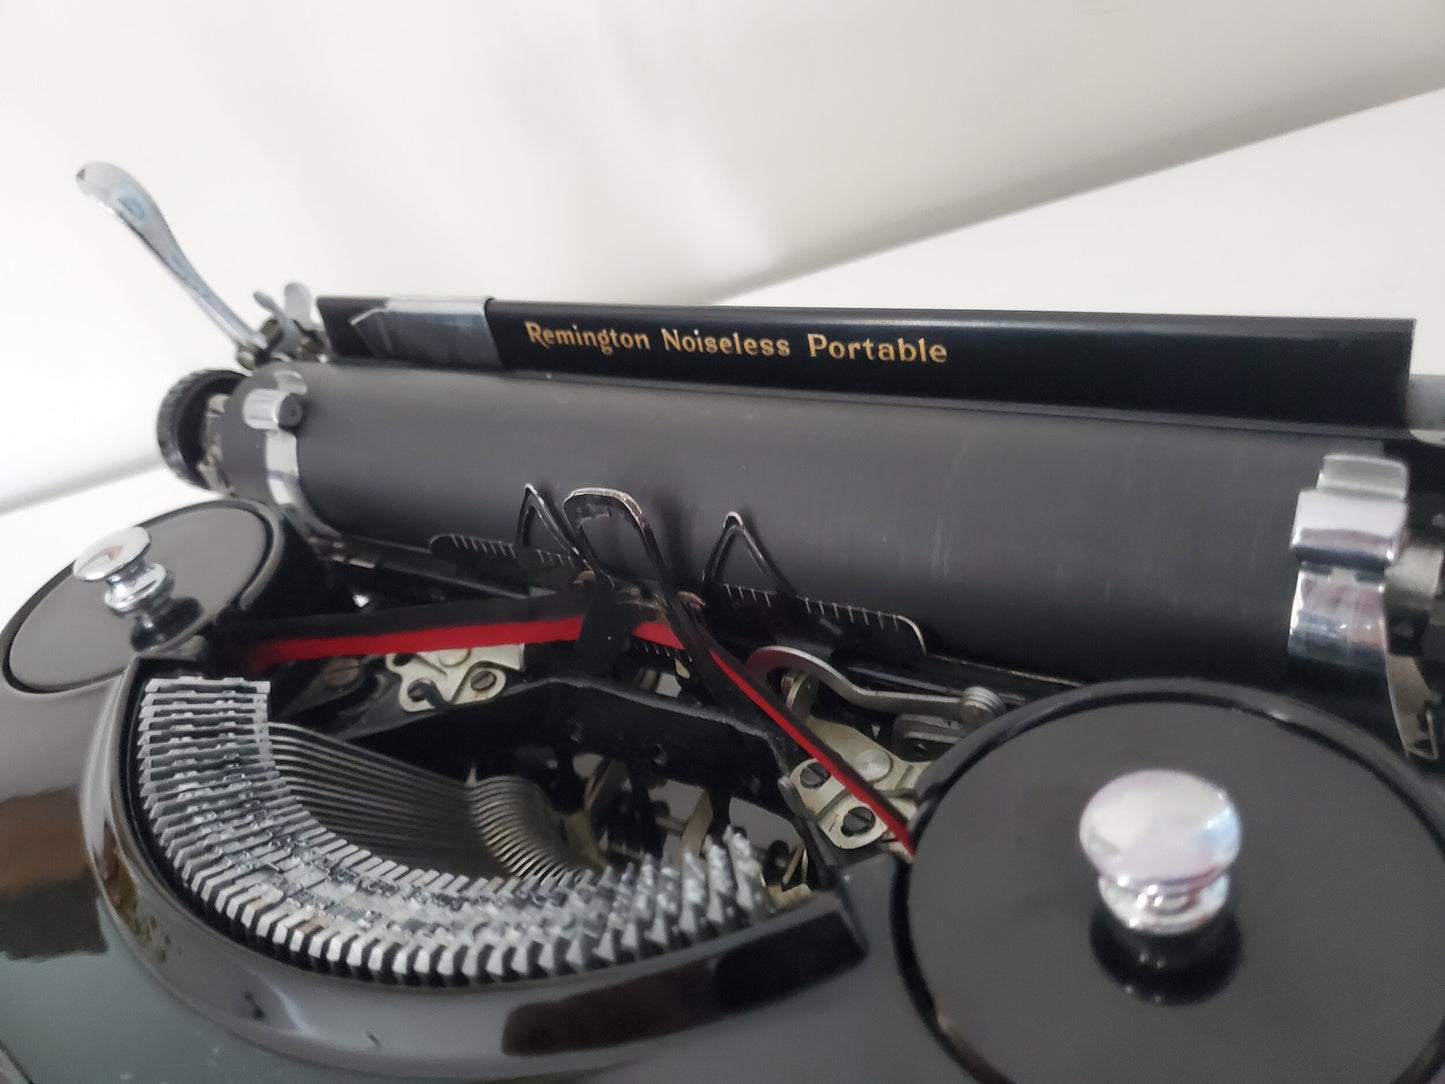 Exquisite Circa 1937 Remington / Underwood Noiseless Vintage Manual Typewriter